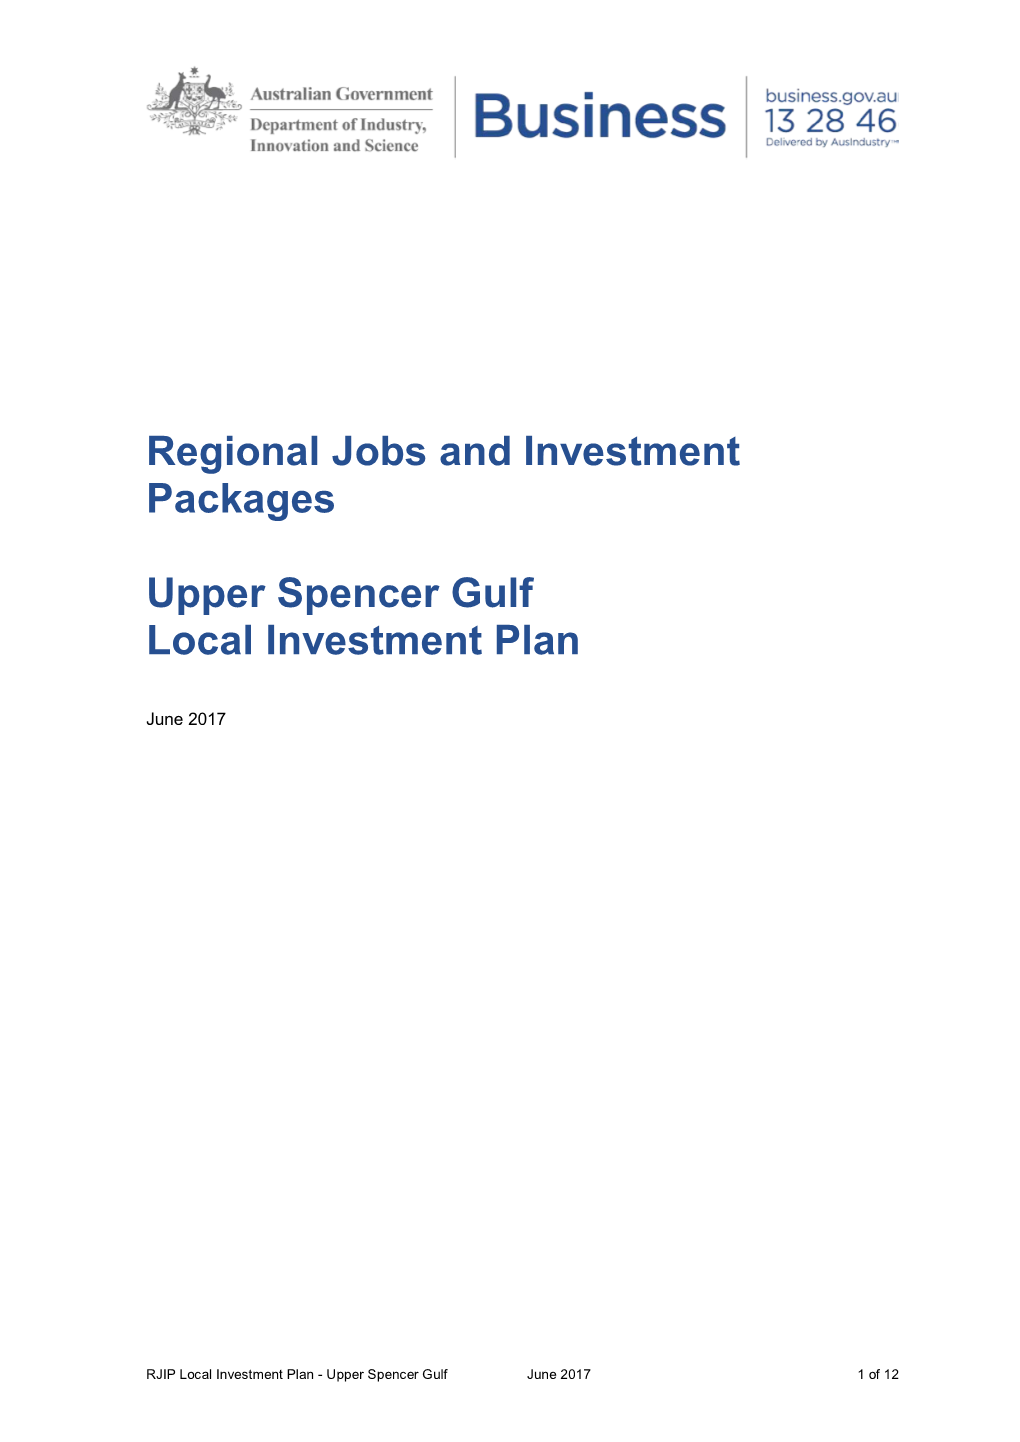 RJIP Local Investment Plan - Upper Spencer Gulf June 2017 1 of 12